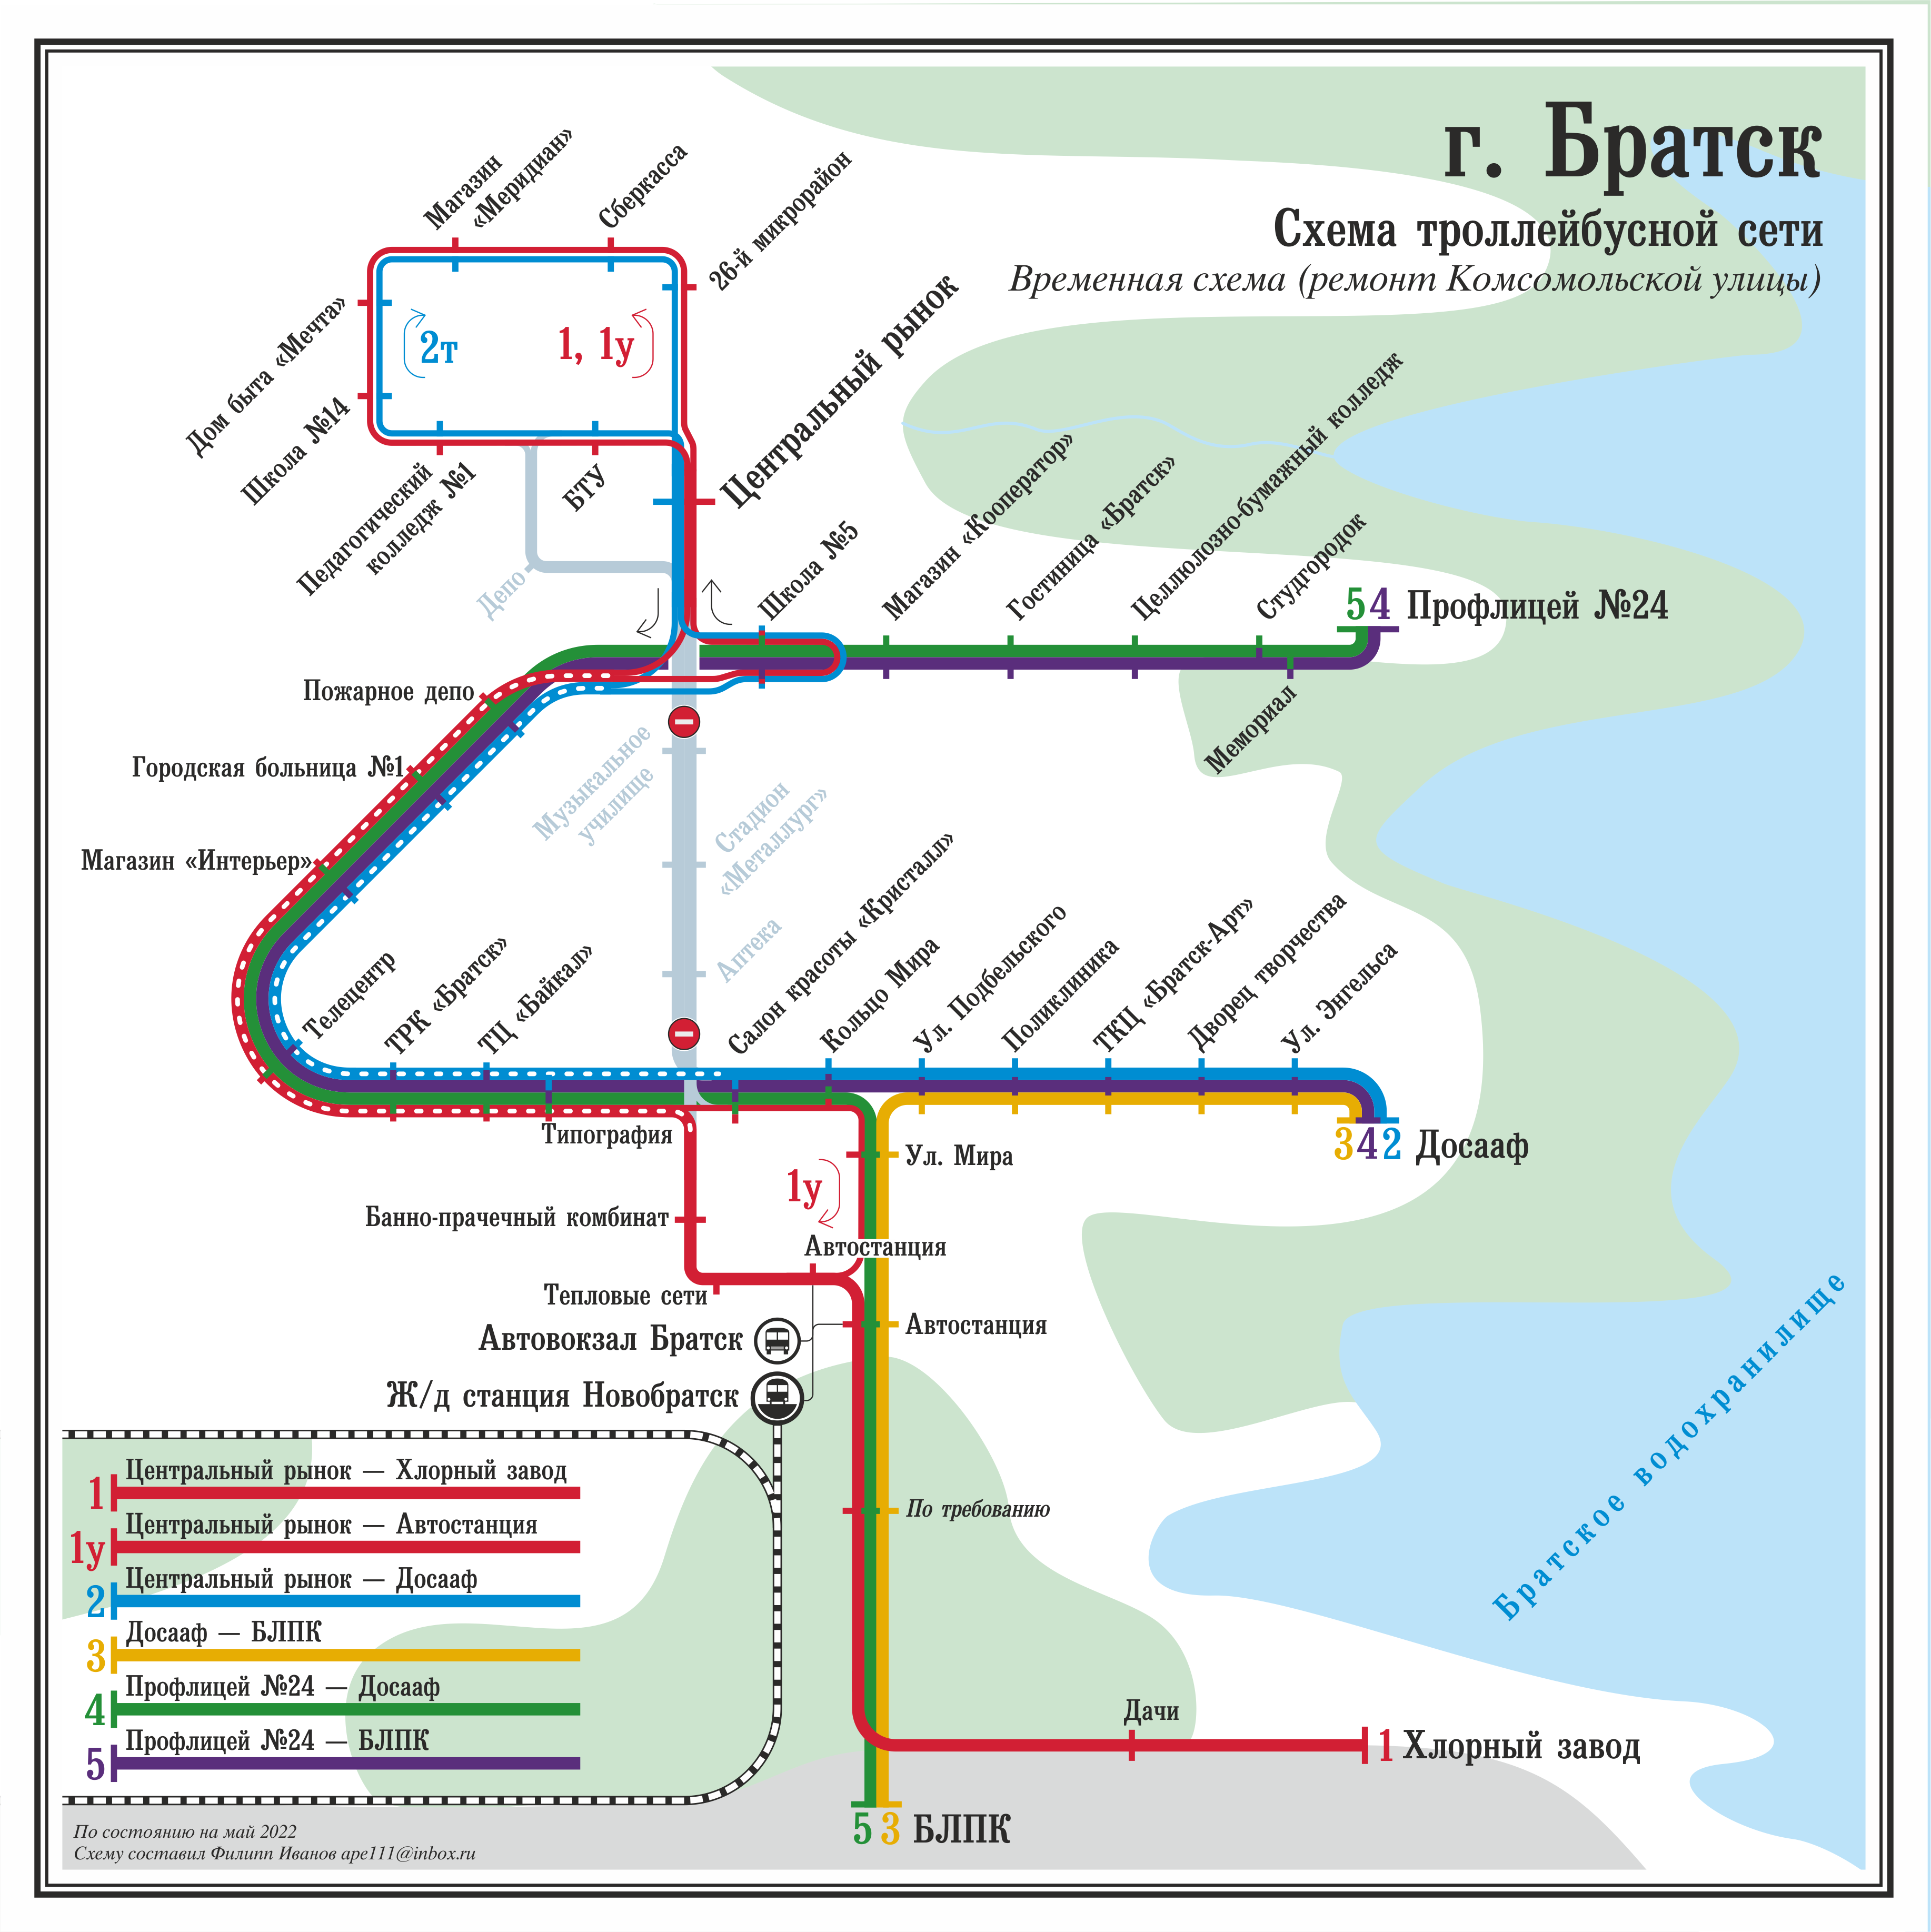 Bratsk — Maps